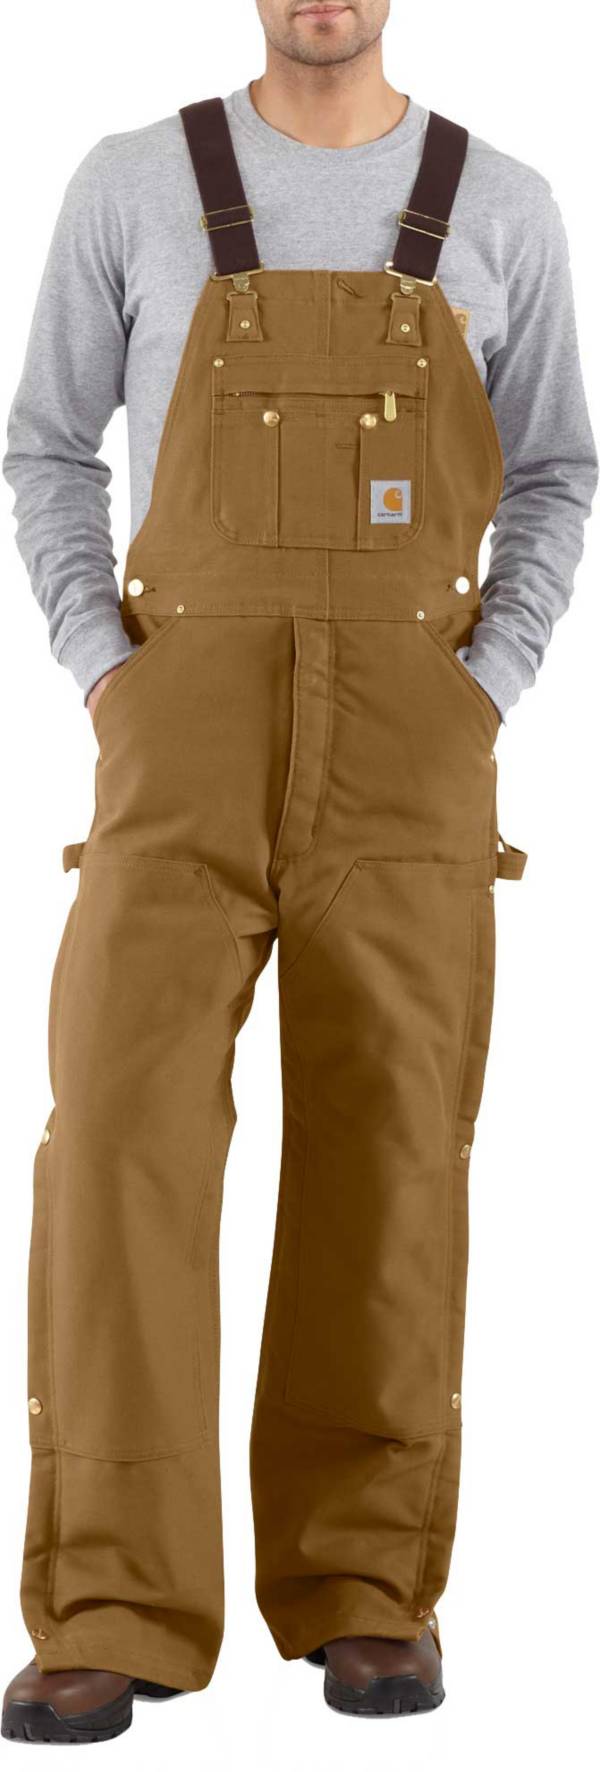 Carhartt Men's Zip-To-Thigh Quilt Lined Duck Bibs product image